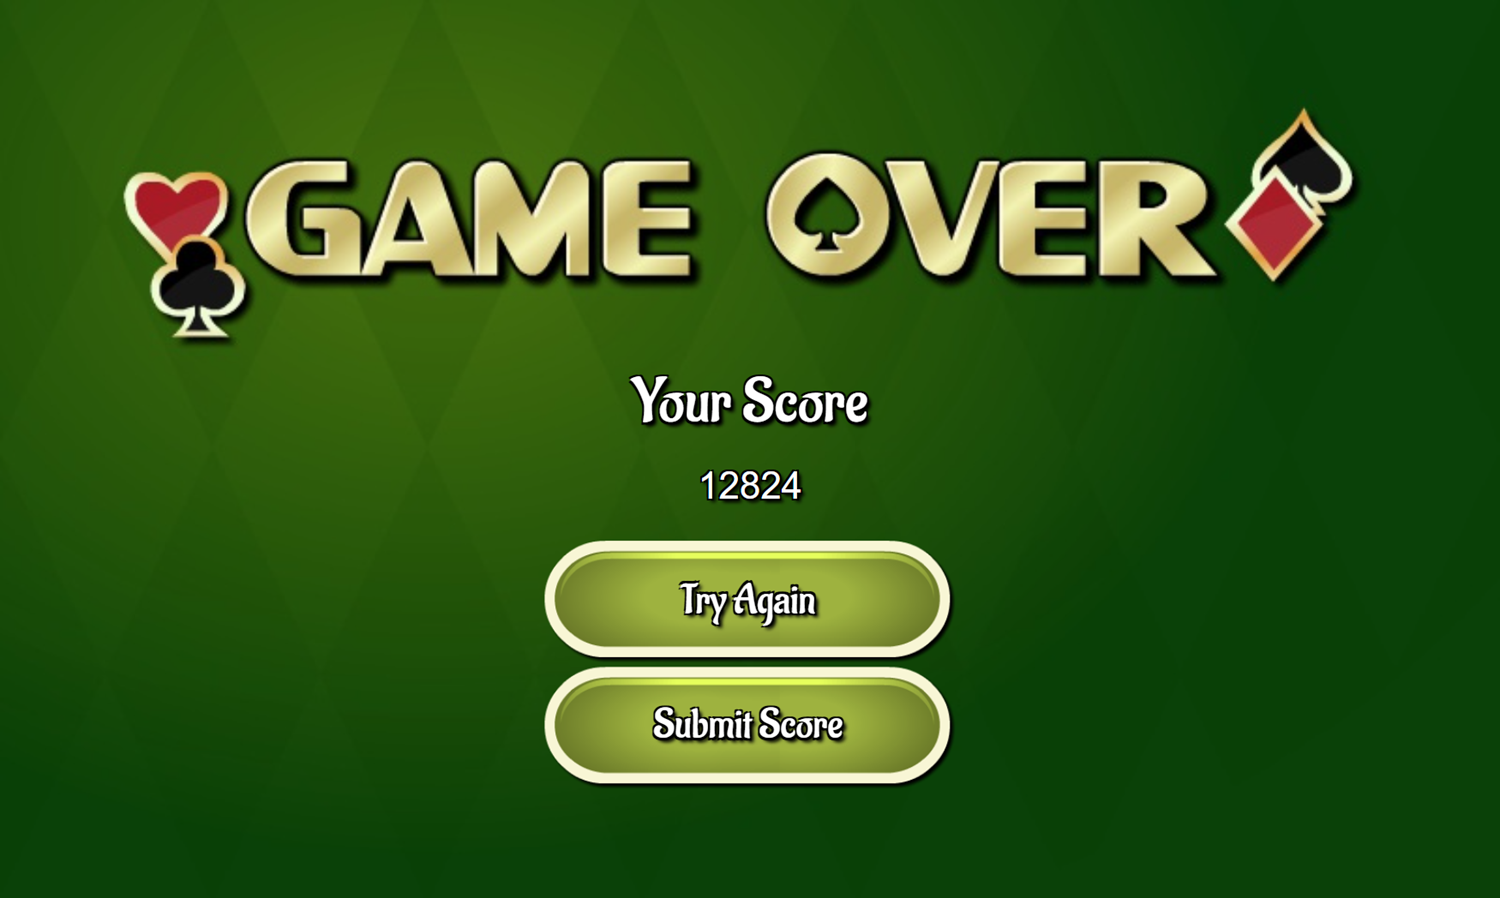 Saratoga Solitaire Game Over Screen Screenshot.